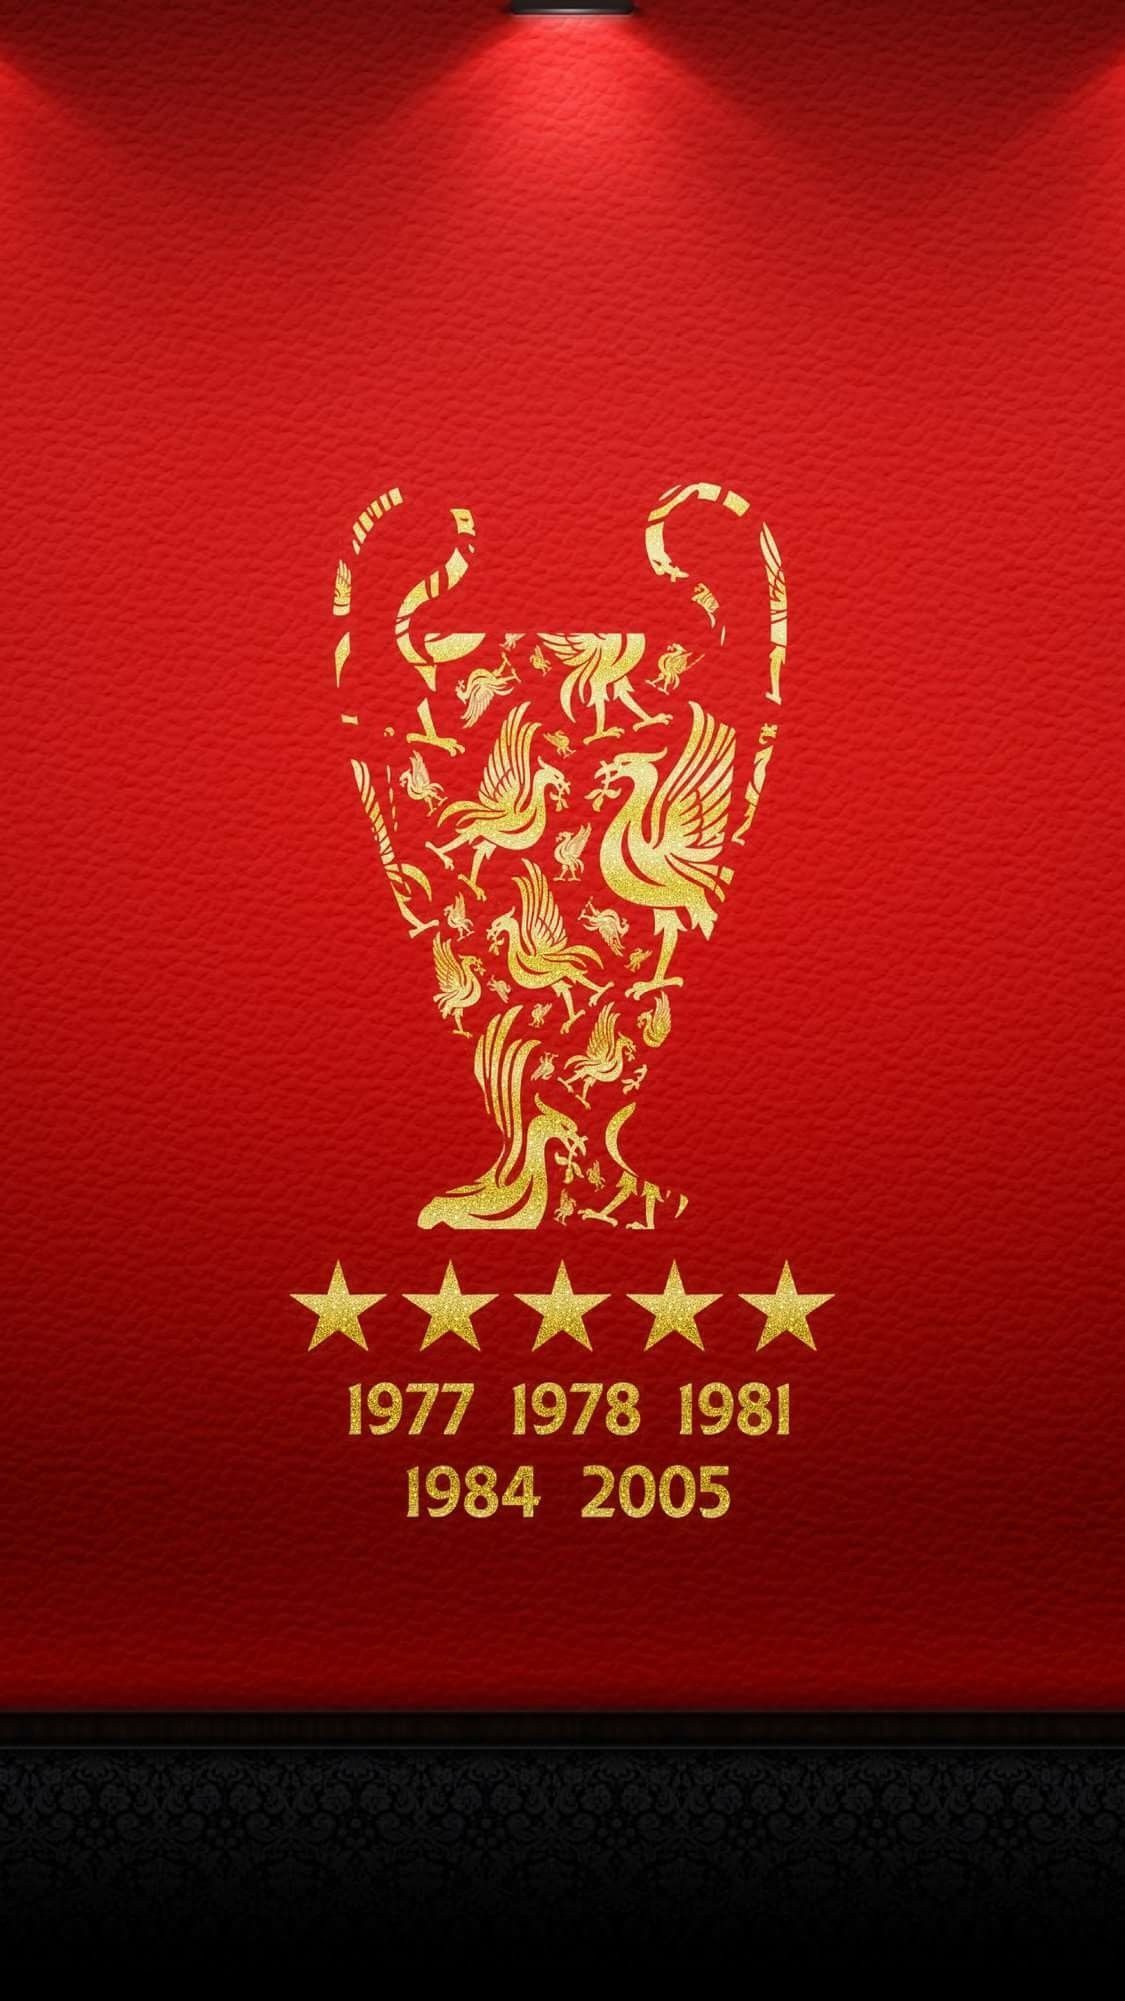 Liverpool Wallpaper Champions League Football di 2020. Sepak